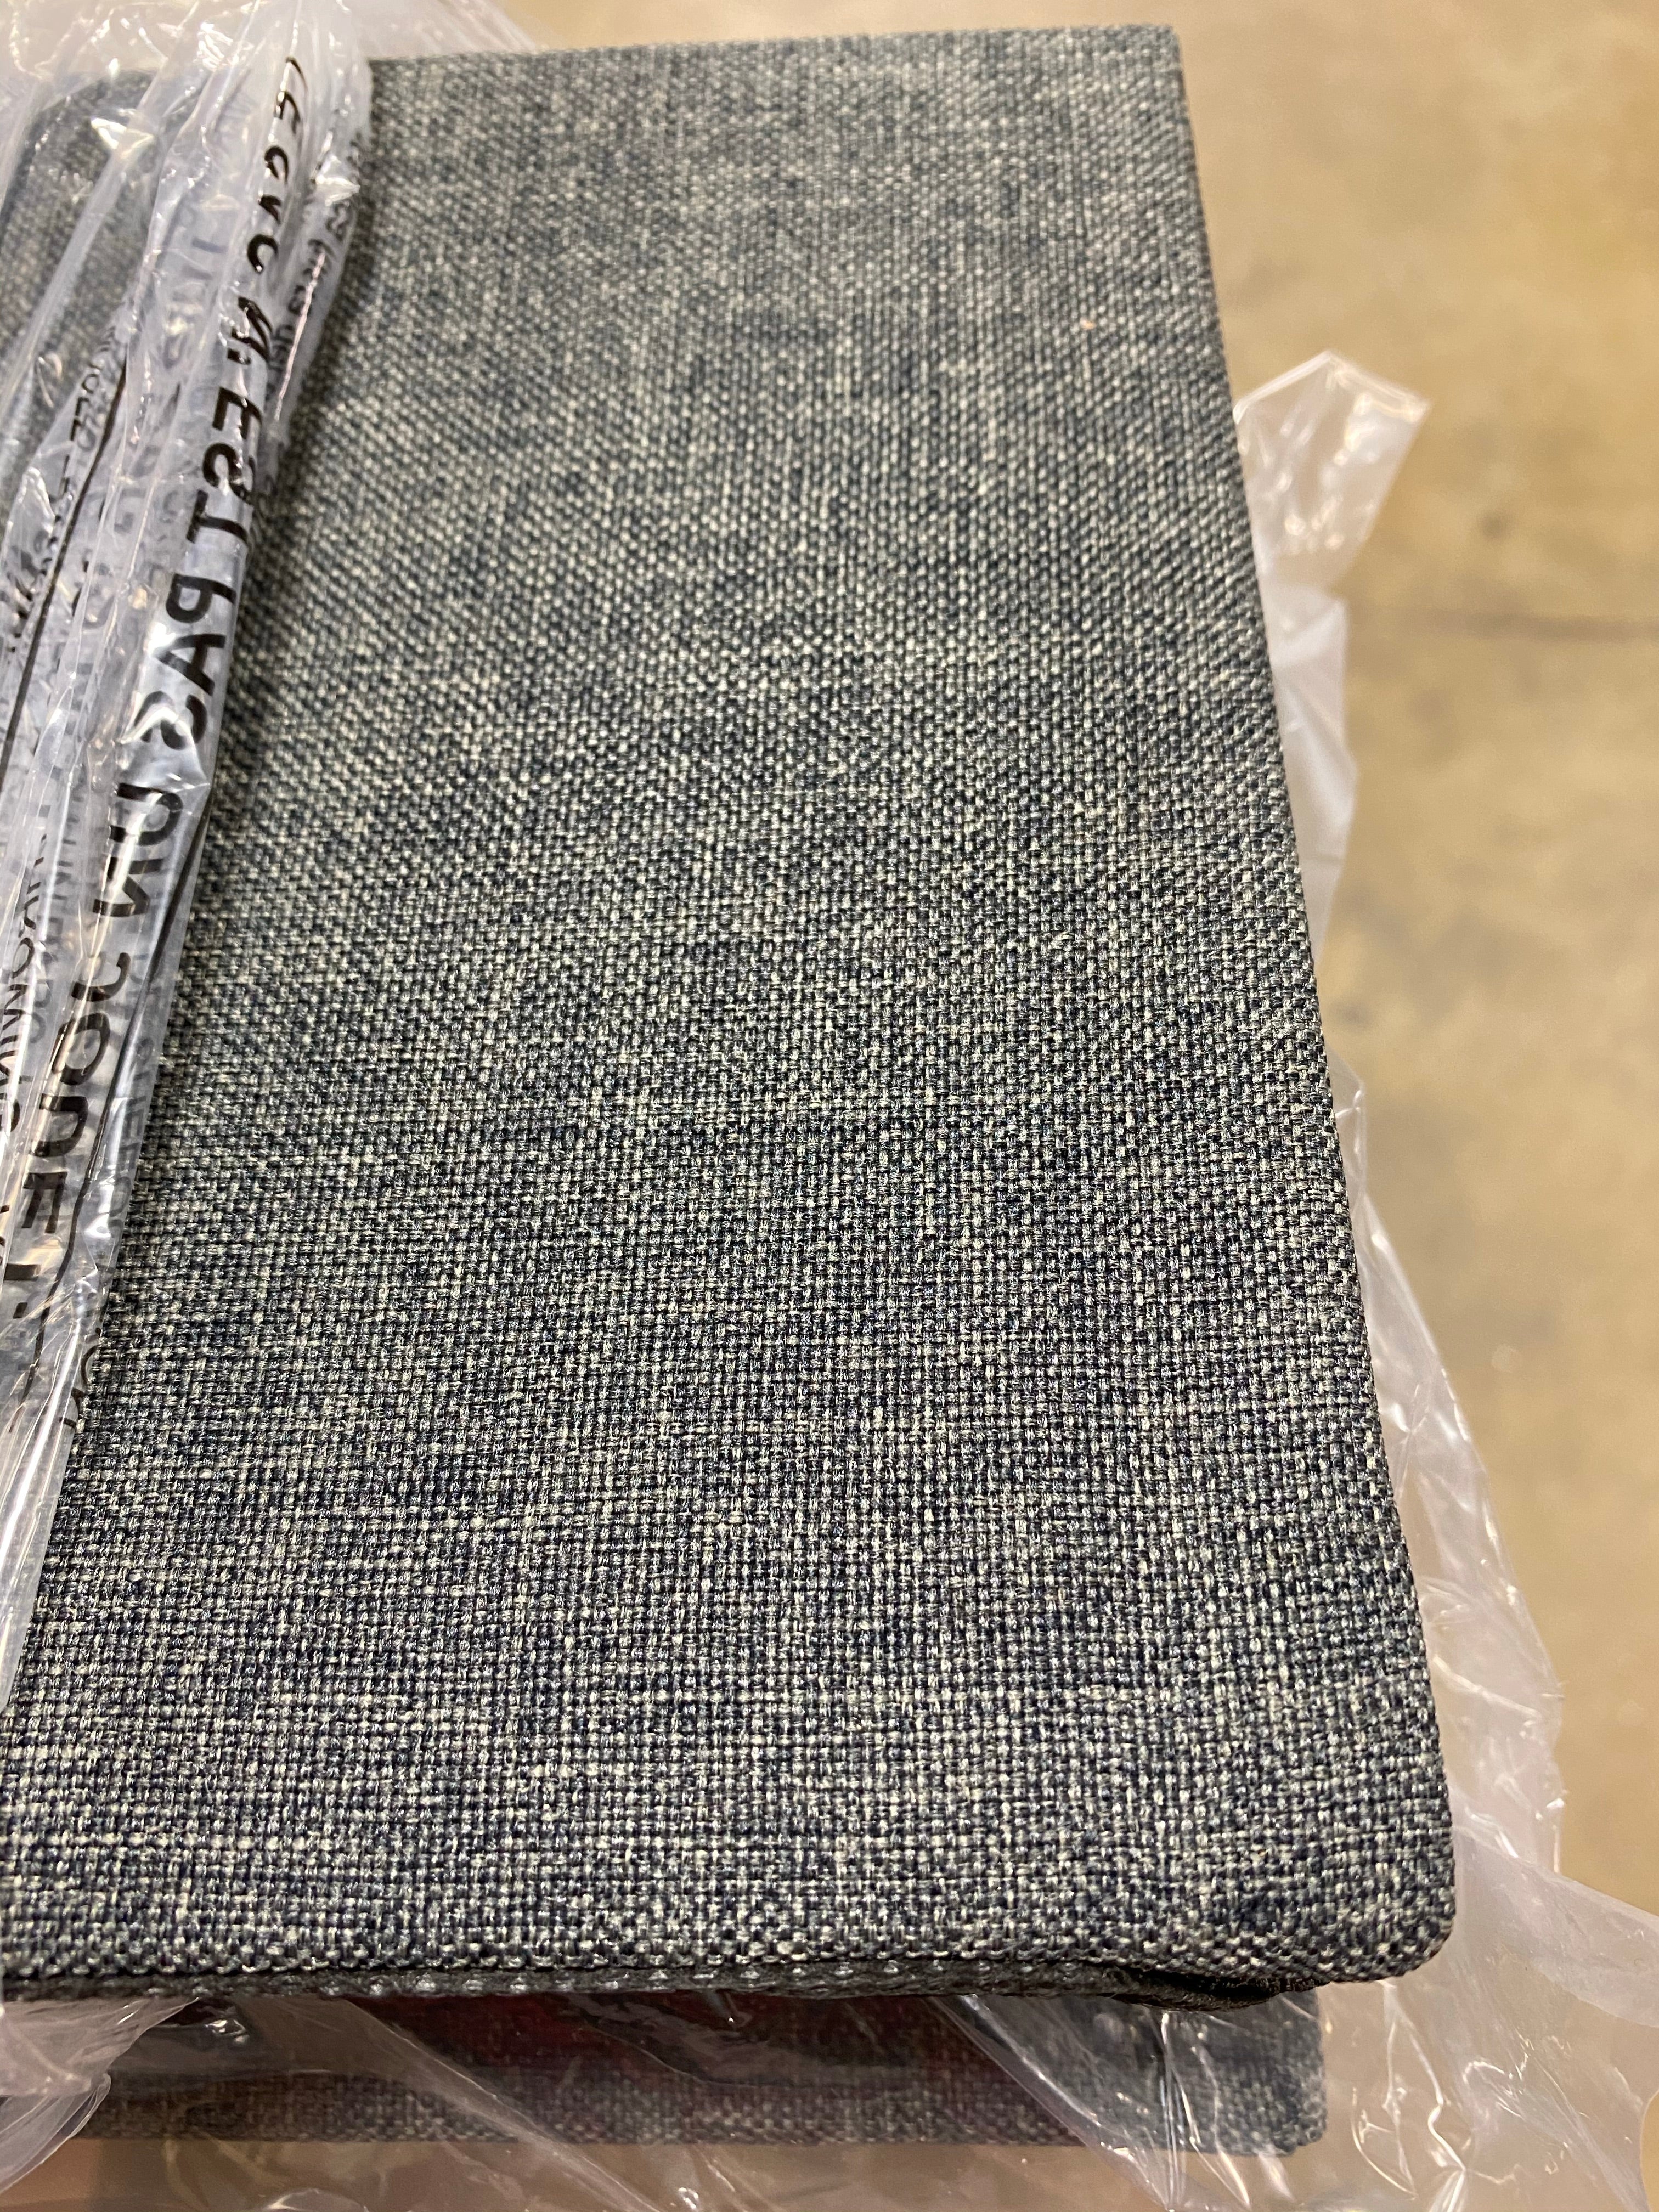 Gray Upholstered Platform Bed Frame - Queen  #SA674